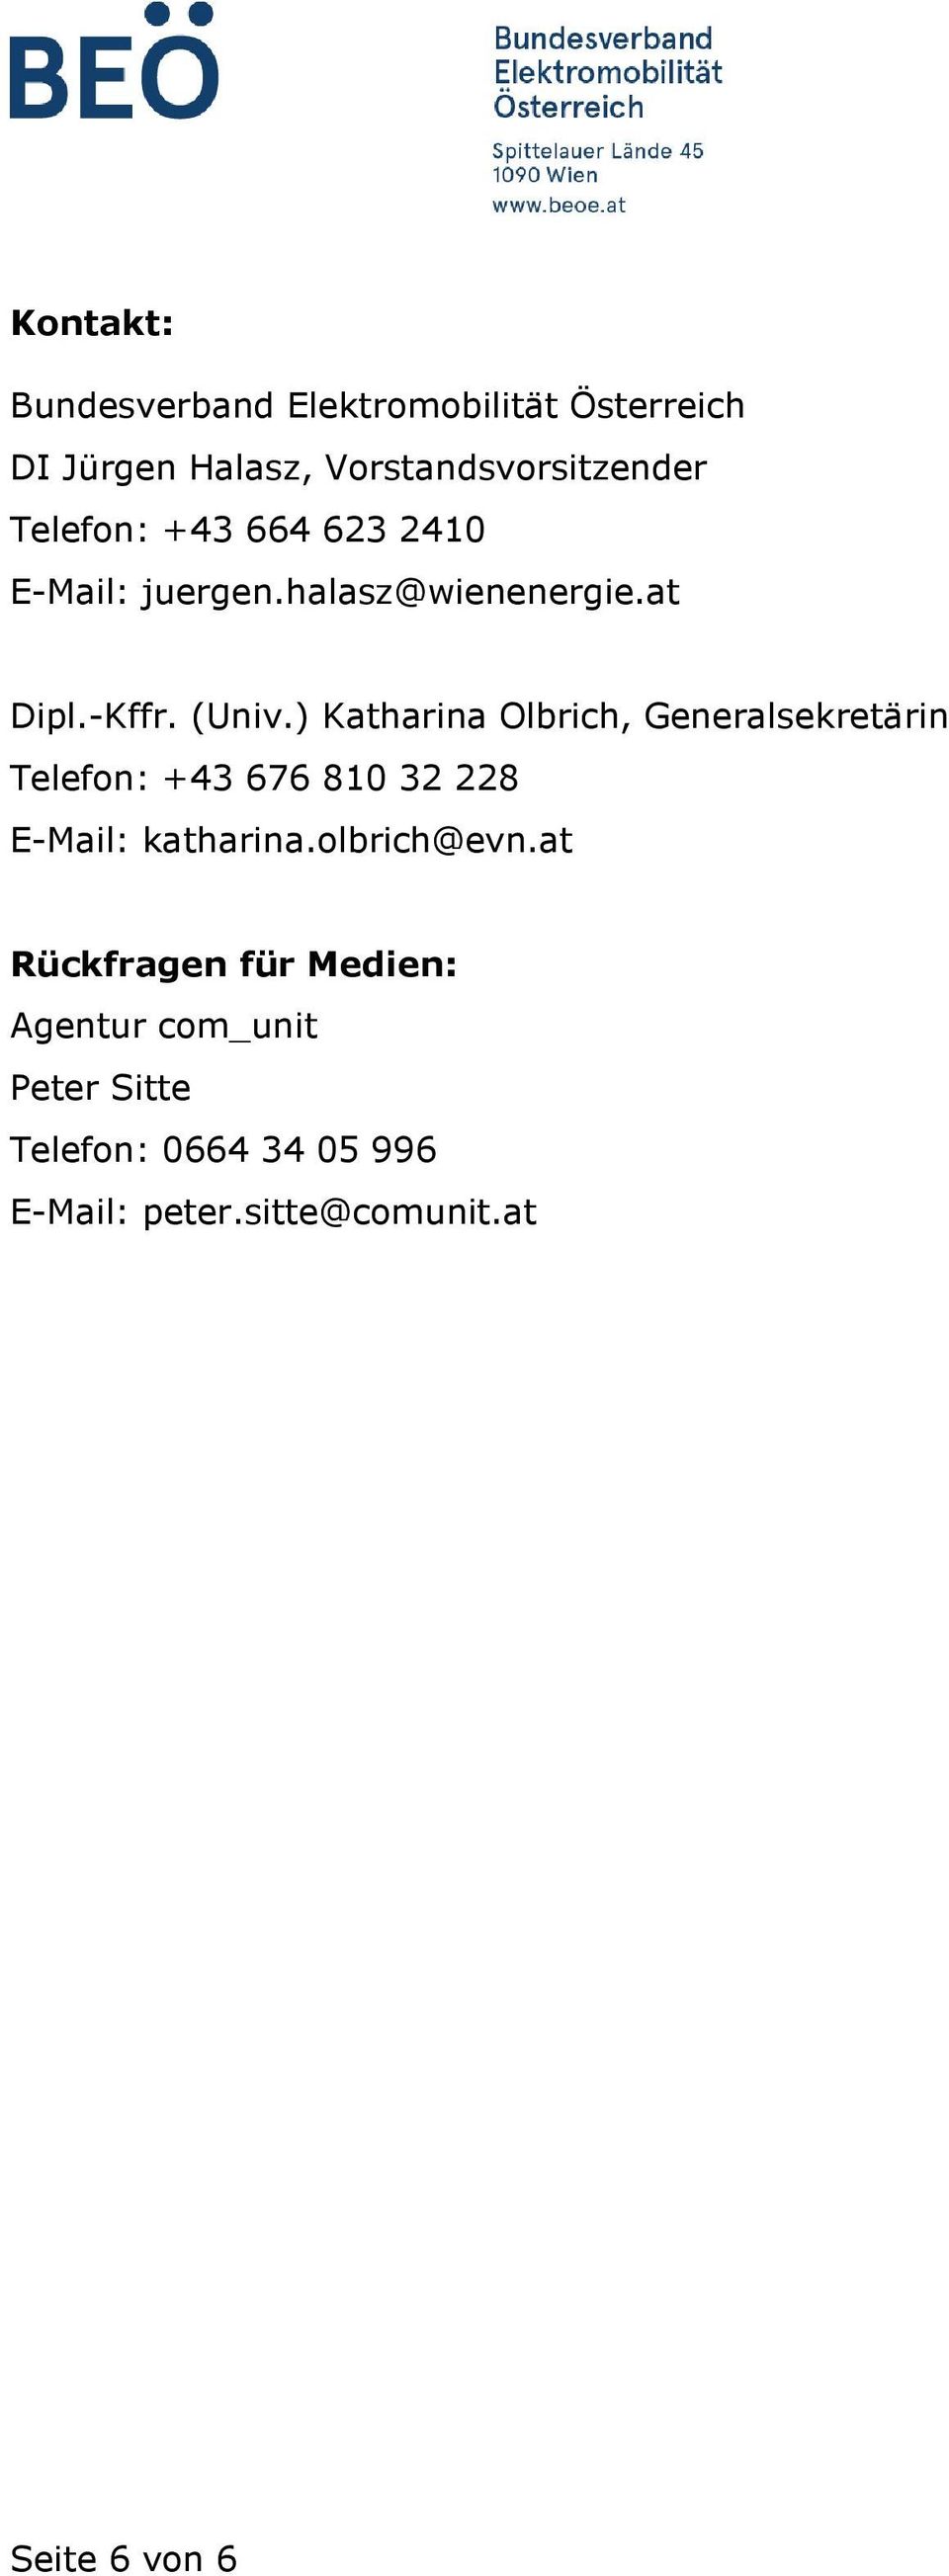 ) Katharina Olbrich, Generalsekretärin Telefon: +43 676 810 32 228 E-Mail: katharina.olbrich@evn.